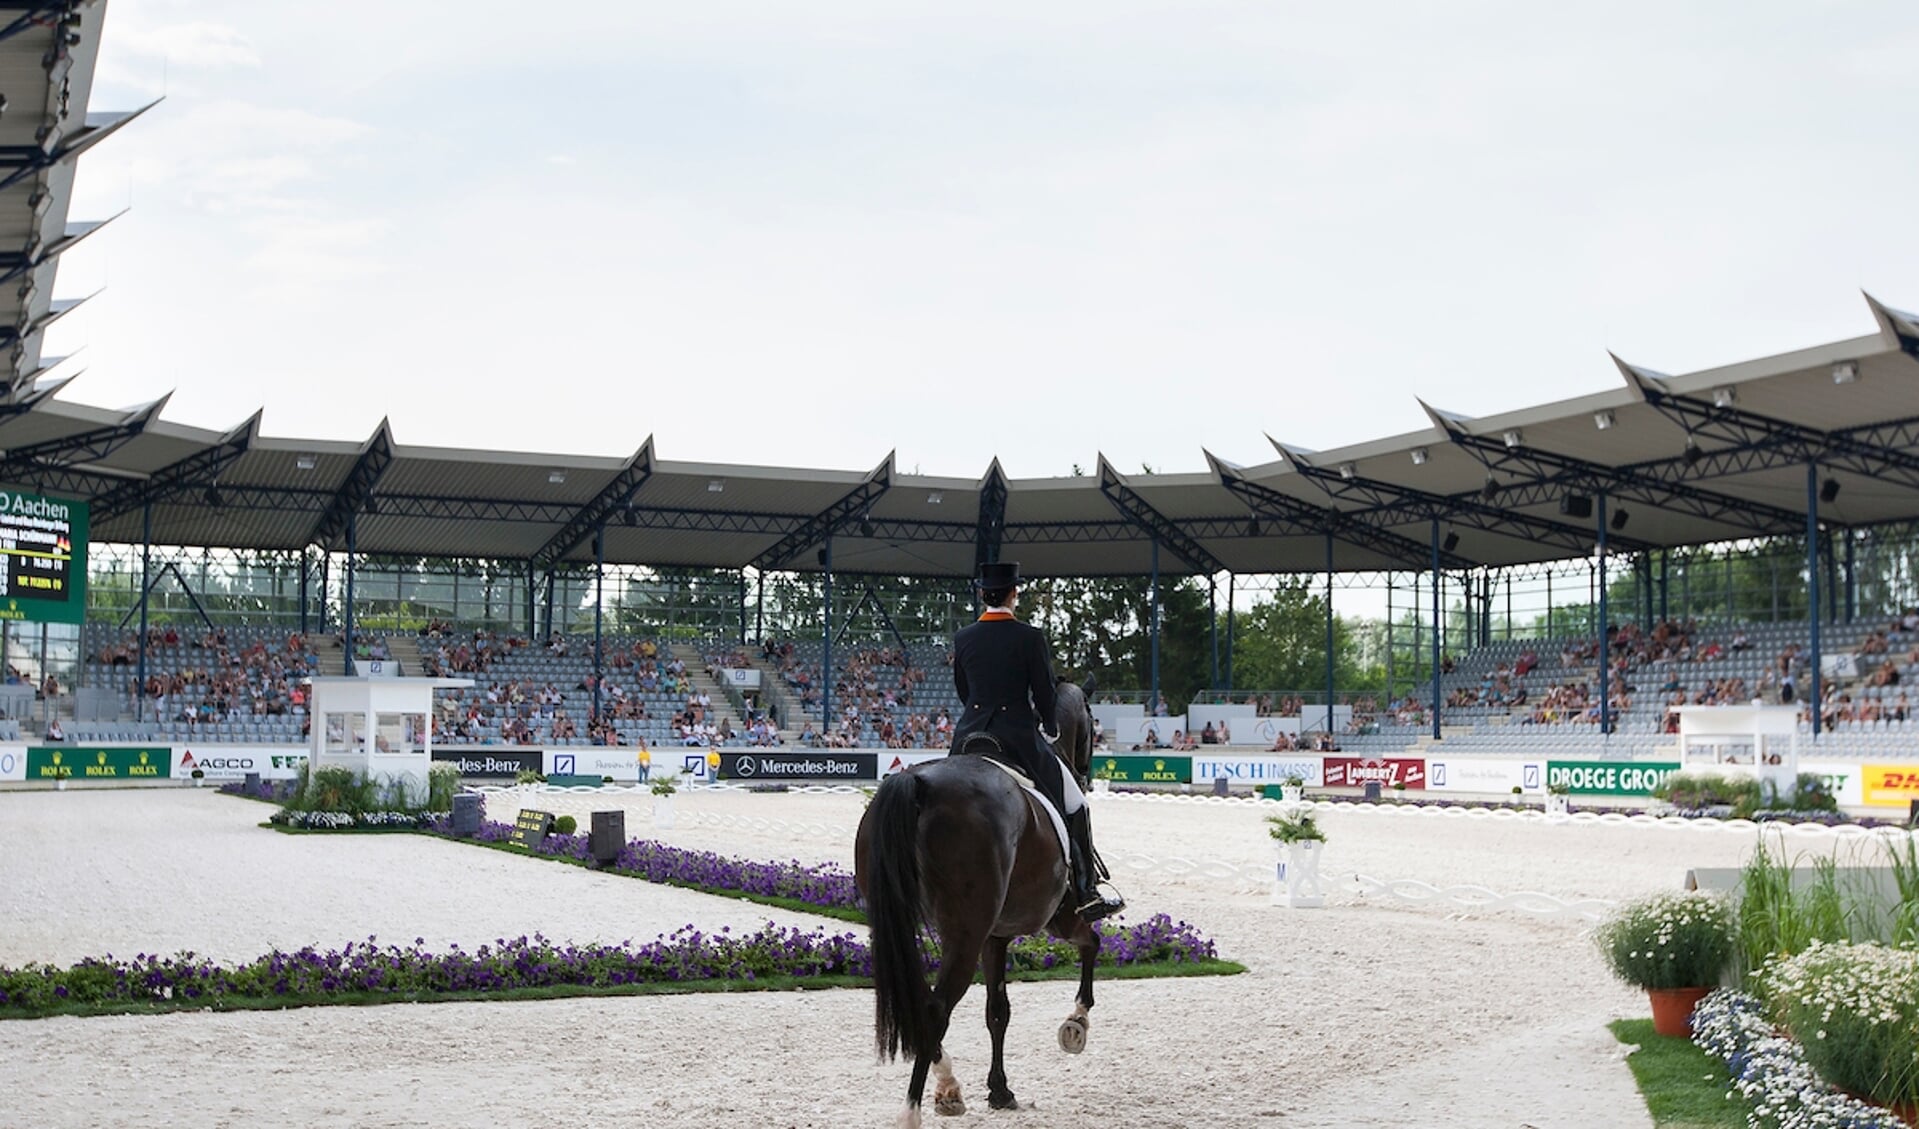 Danielle van Mierlo - Ucento
World Equestrian Festival, CHIO Aachen 2014
© DigiShots